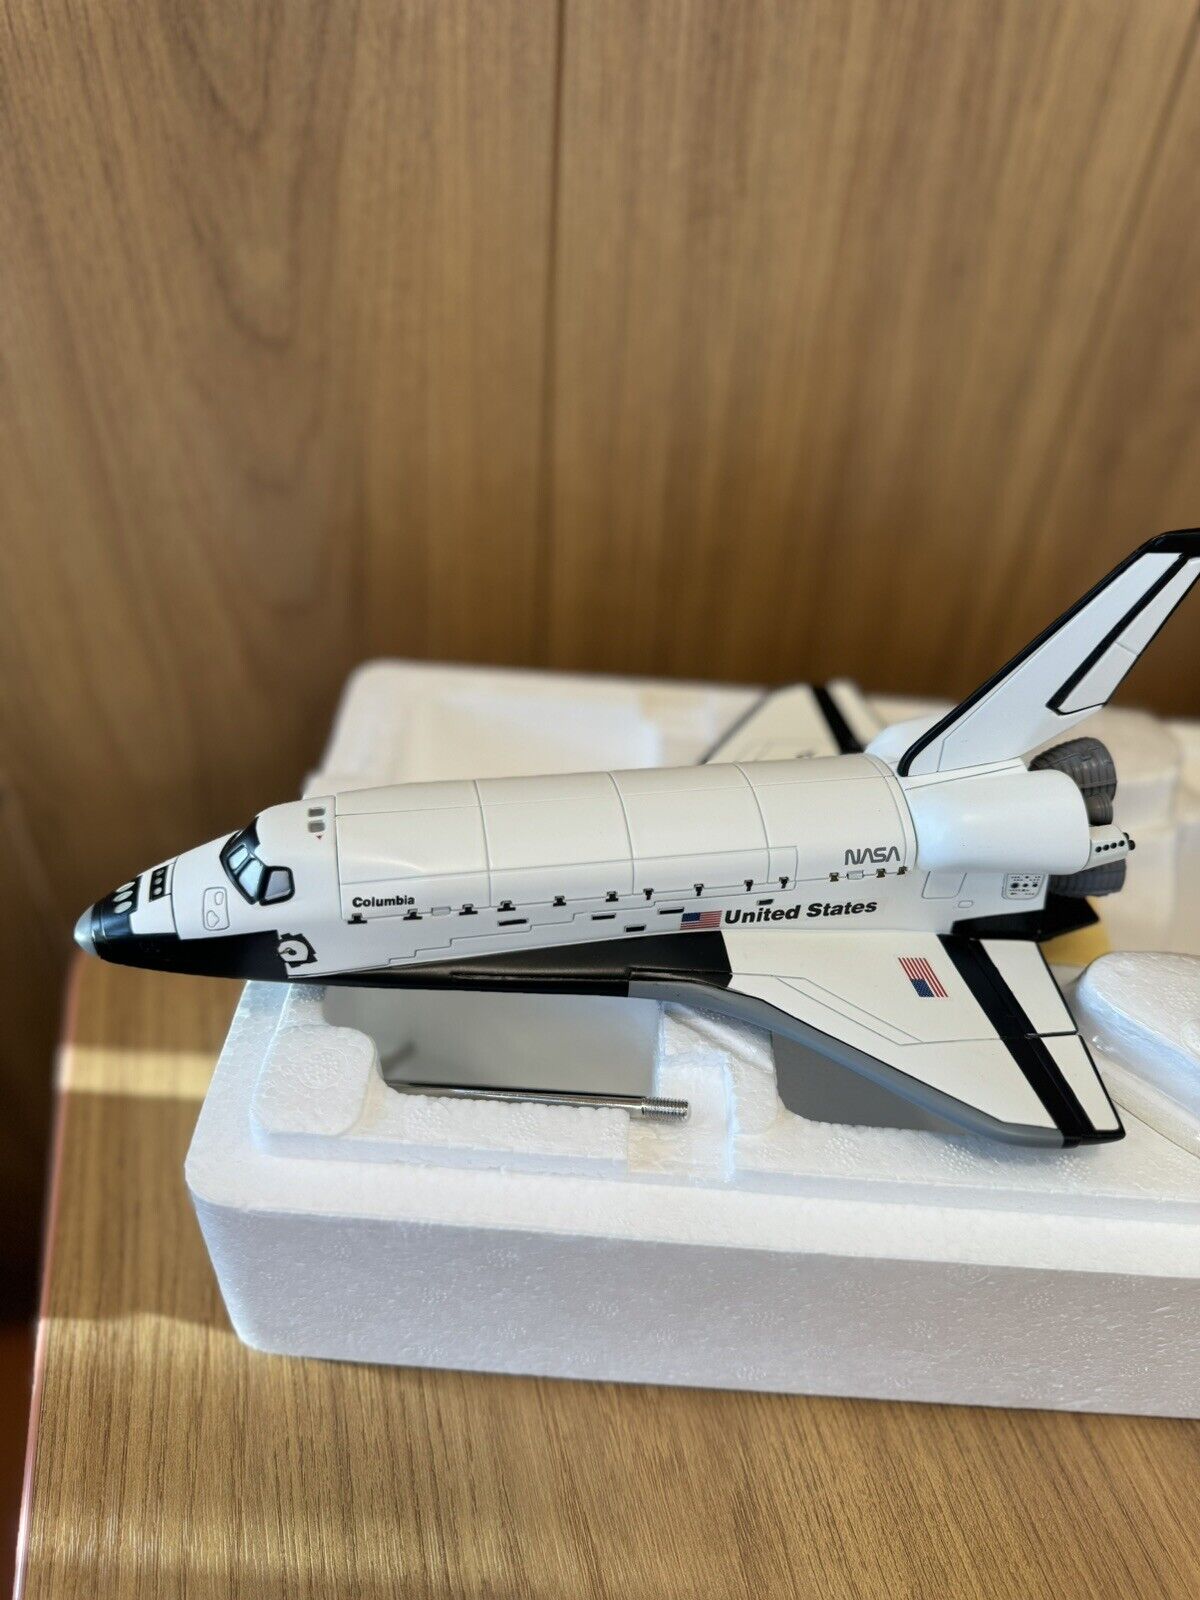 ORIGINAL Space Shuttle NASA Columbia ( STS-1) Desktop Model - Danbury Mint